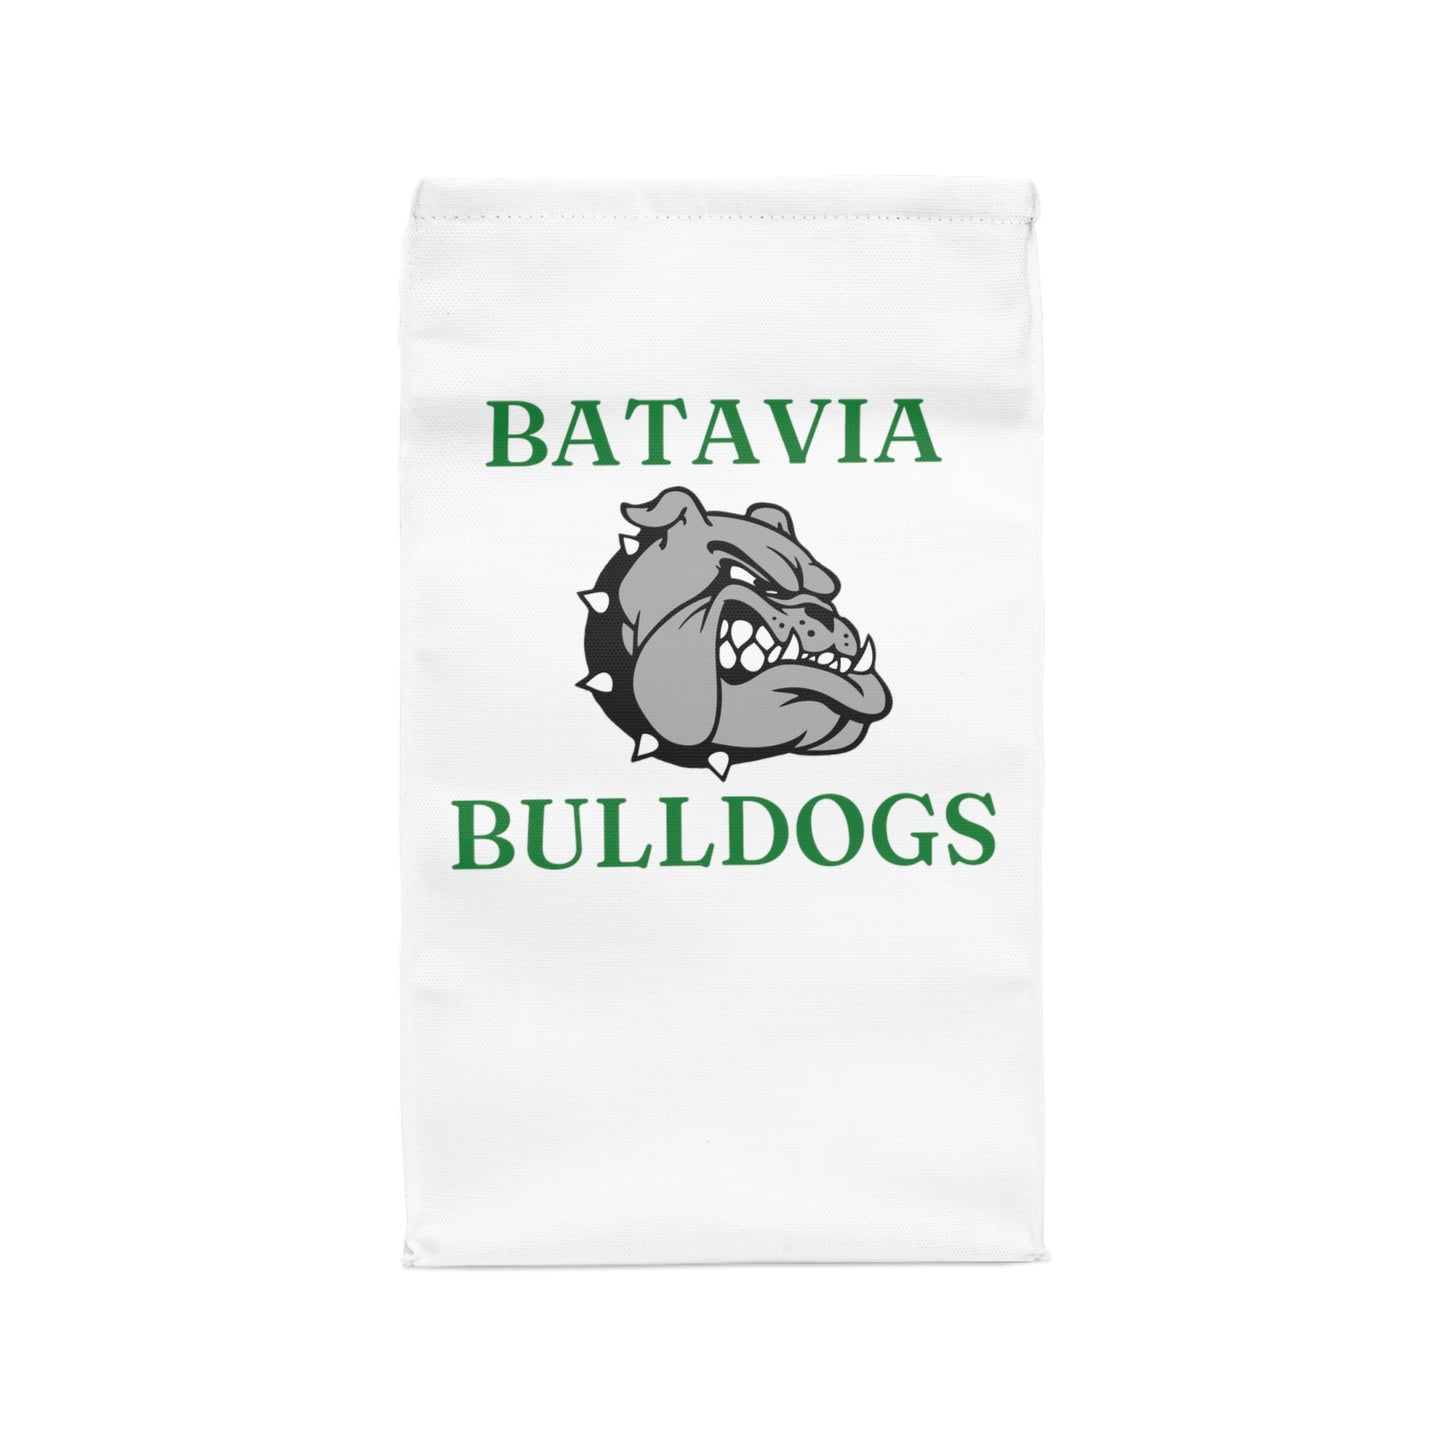 Bulldogs Polyester Lunch Bag